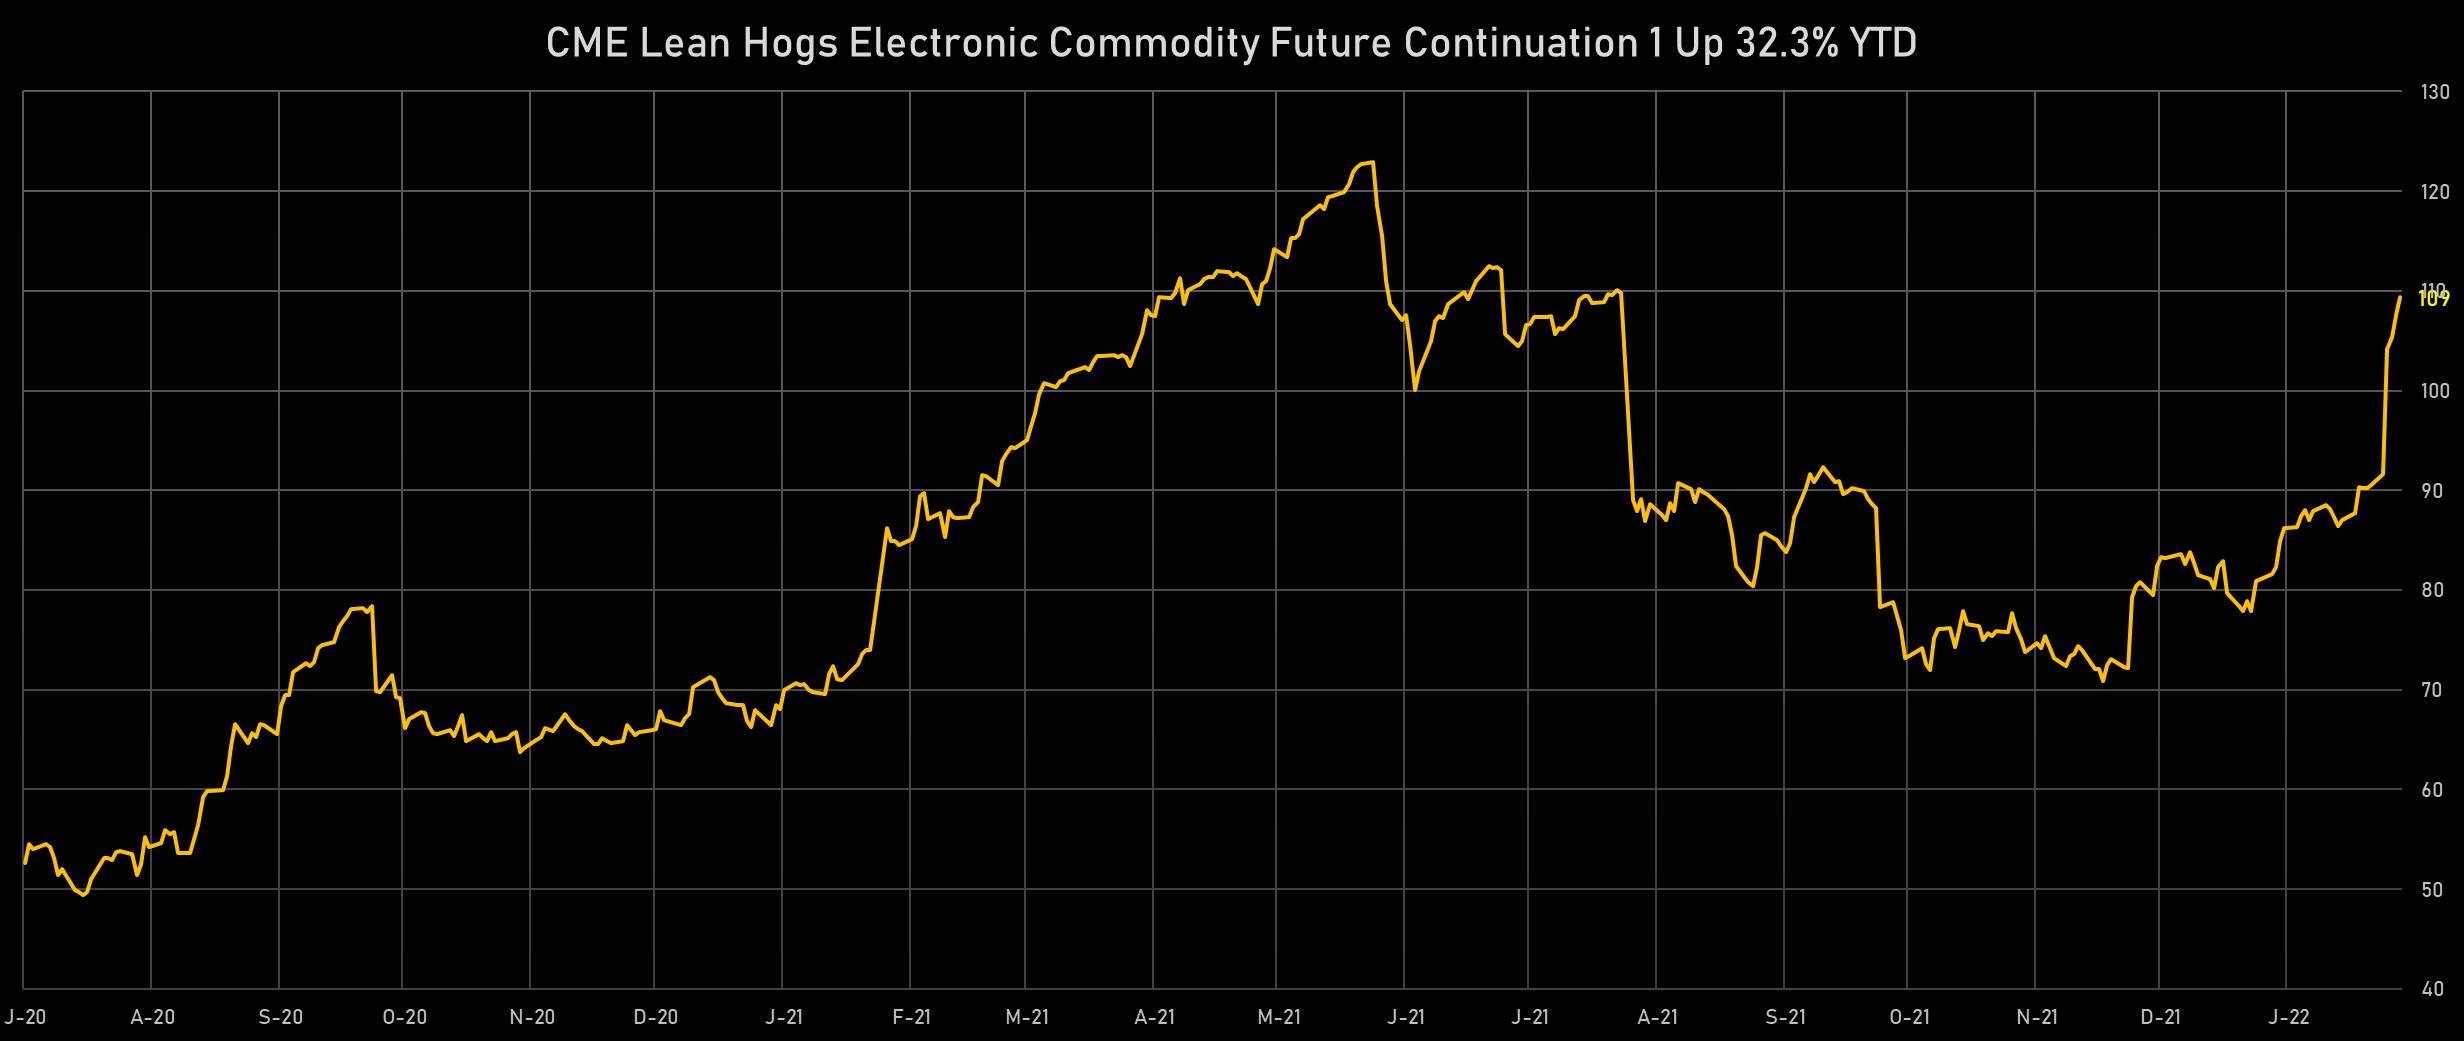 CME Lean Hogs Front Month Futures Prices | Sources: phipost.com, Refinitiv data